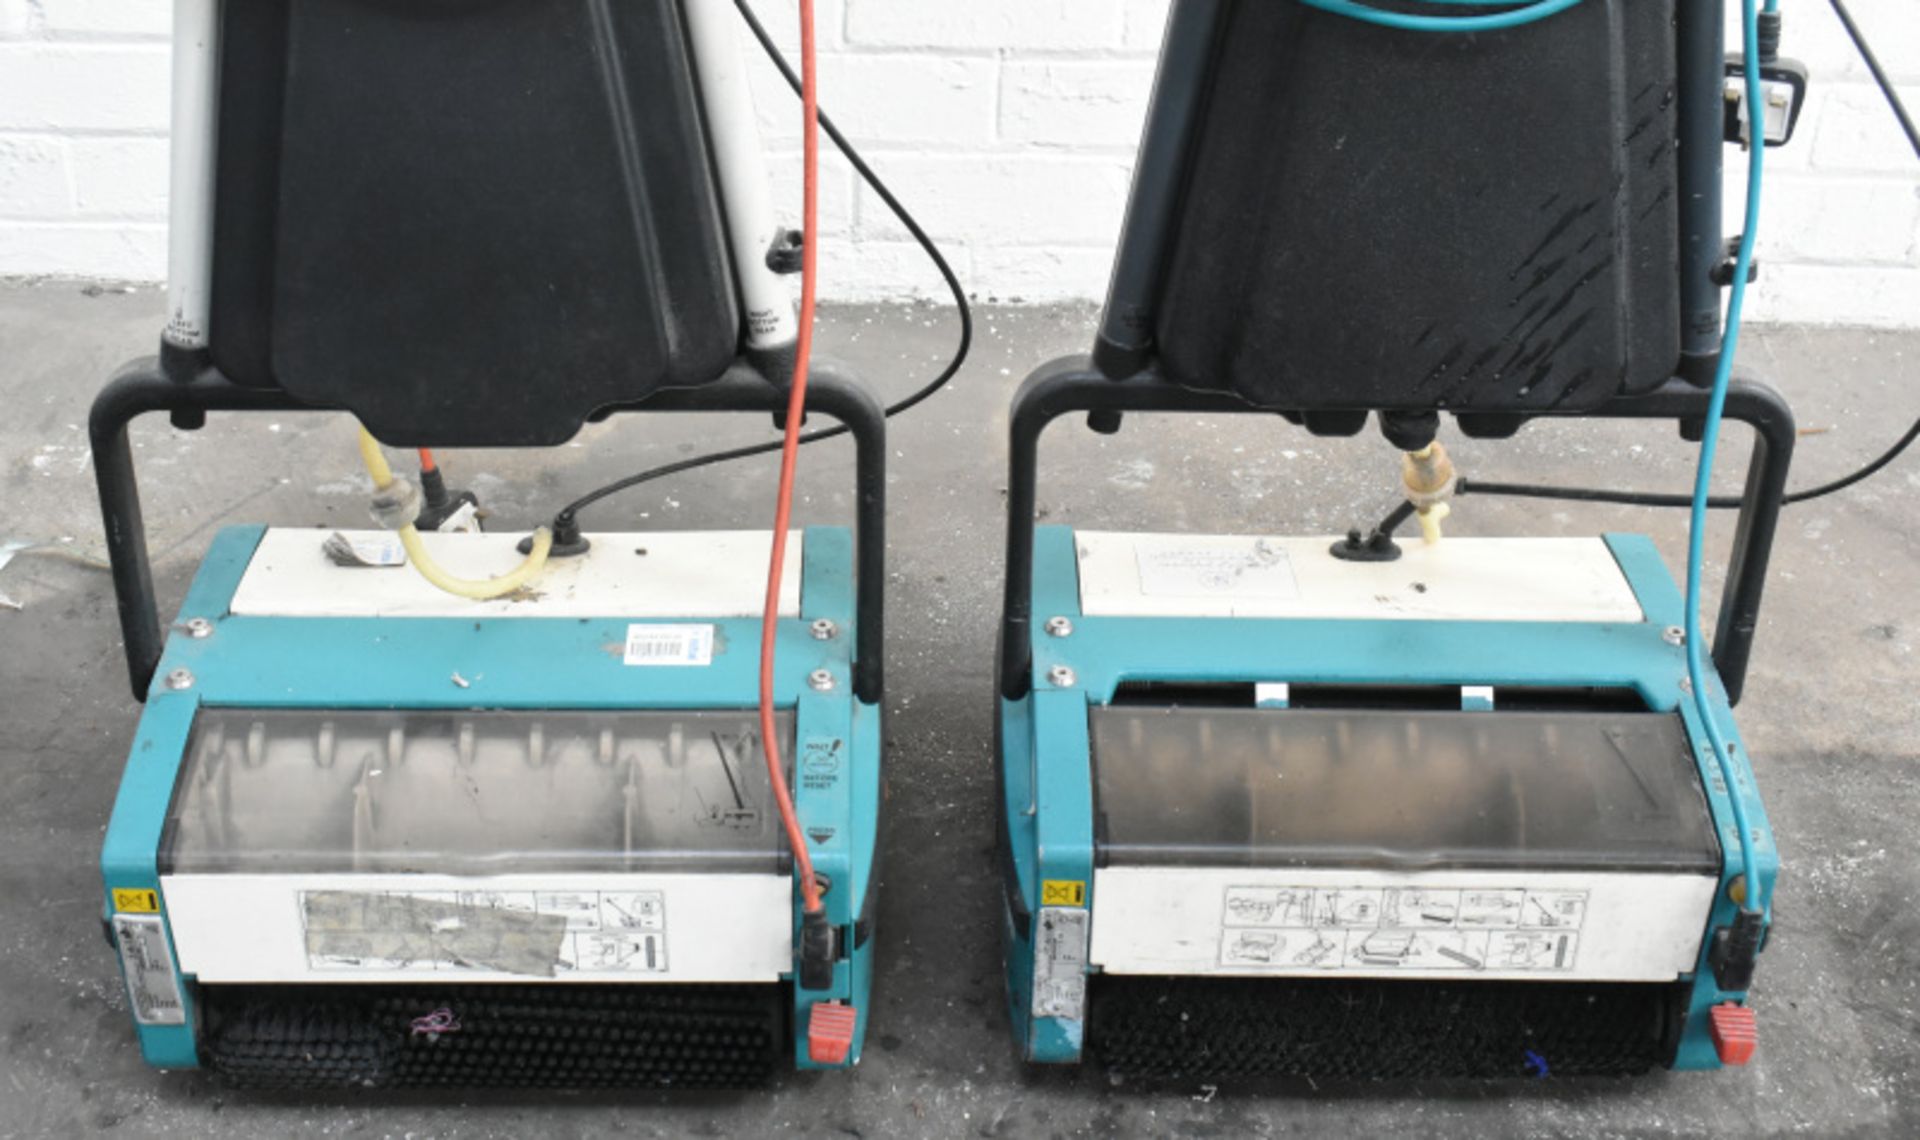 2 x Truvox Multiwash Floor Scrubber Dryer, Model- MW340/Pump - Image 4 of 6